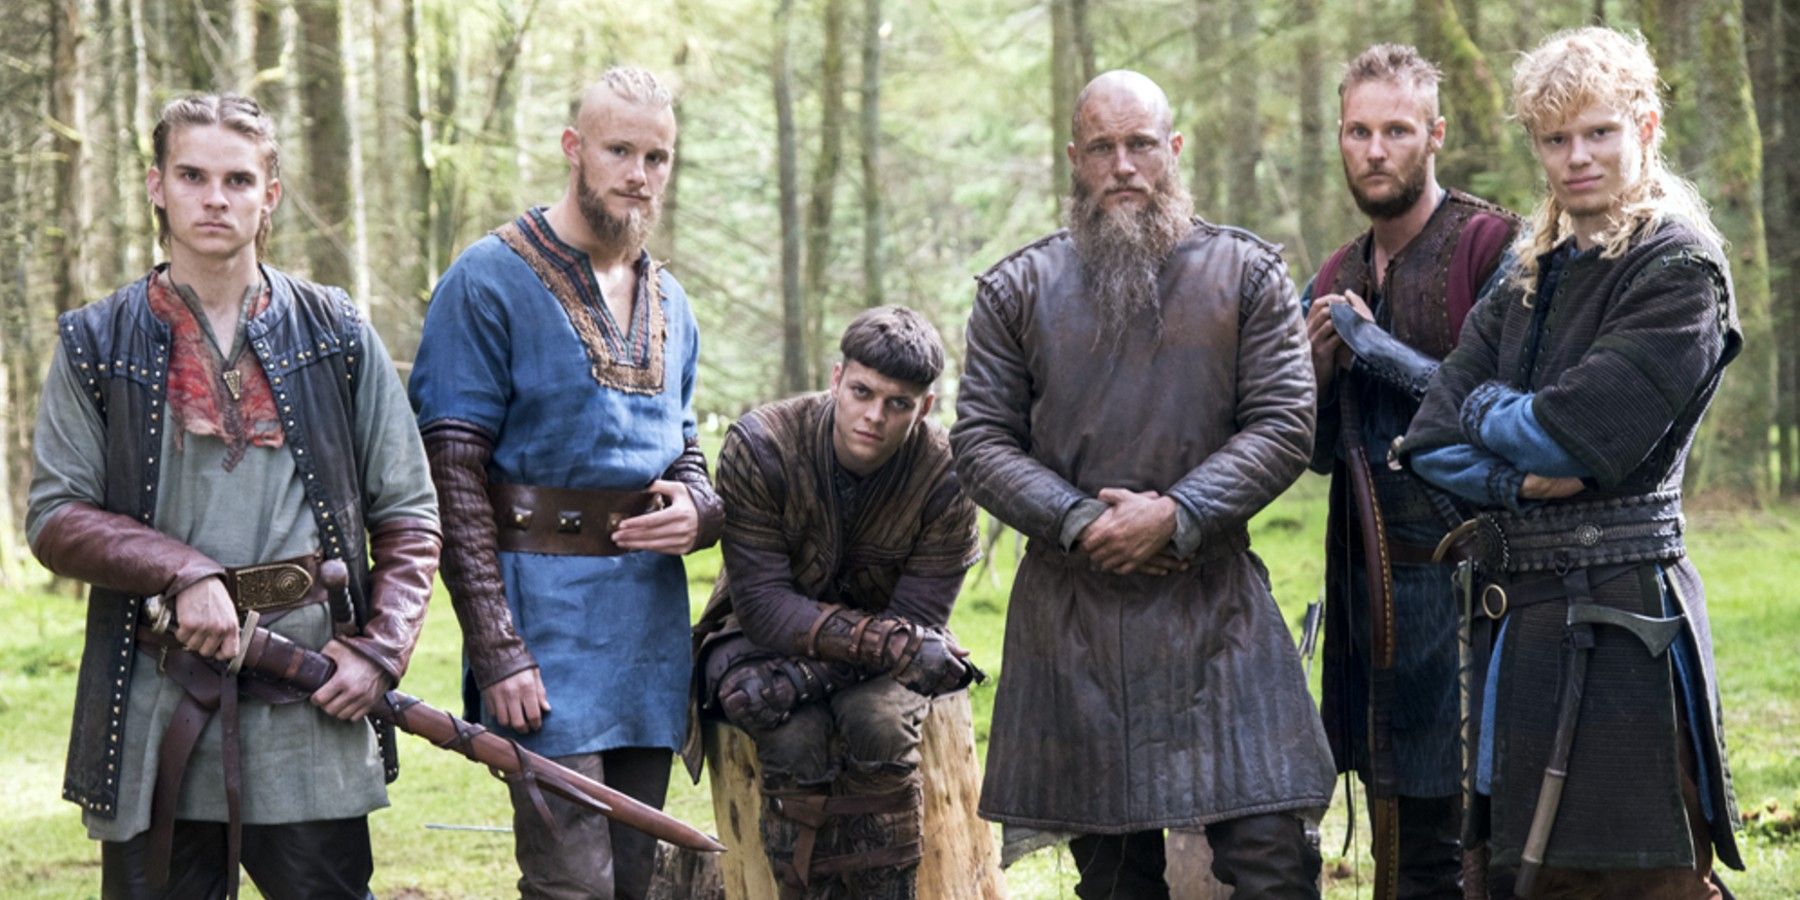 Hvitserk, Bjorn, Ivar, Ragnar, Ubbe, and Sigurd